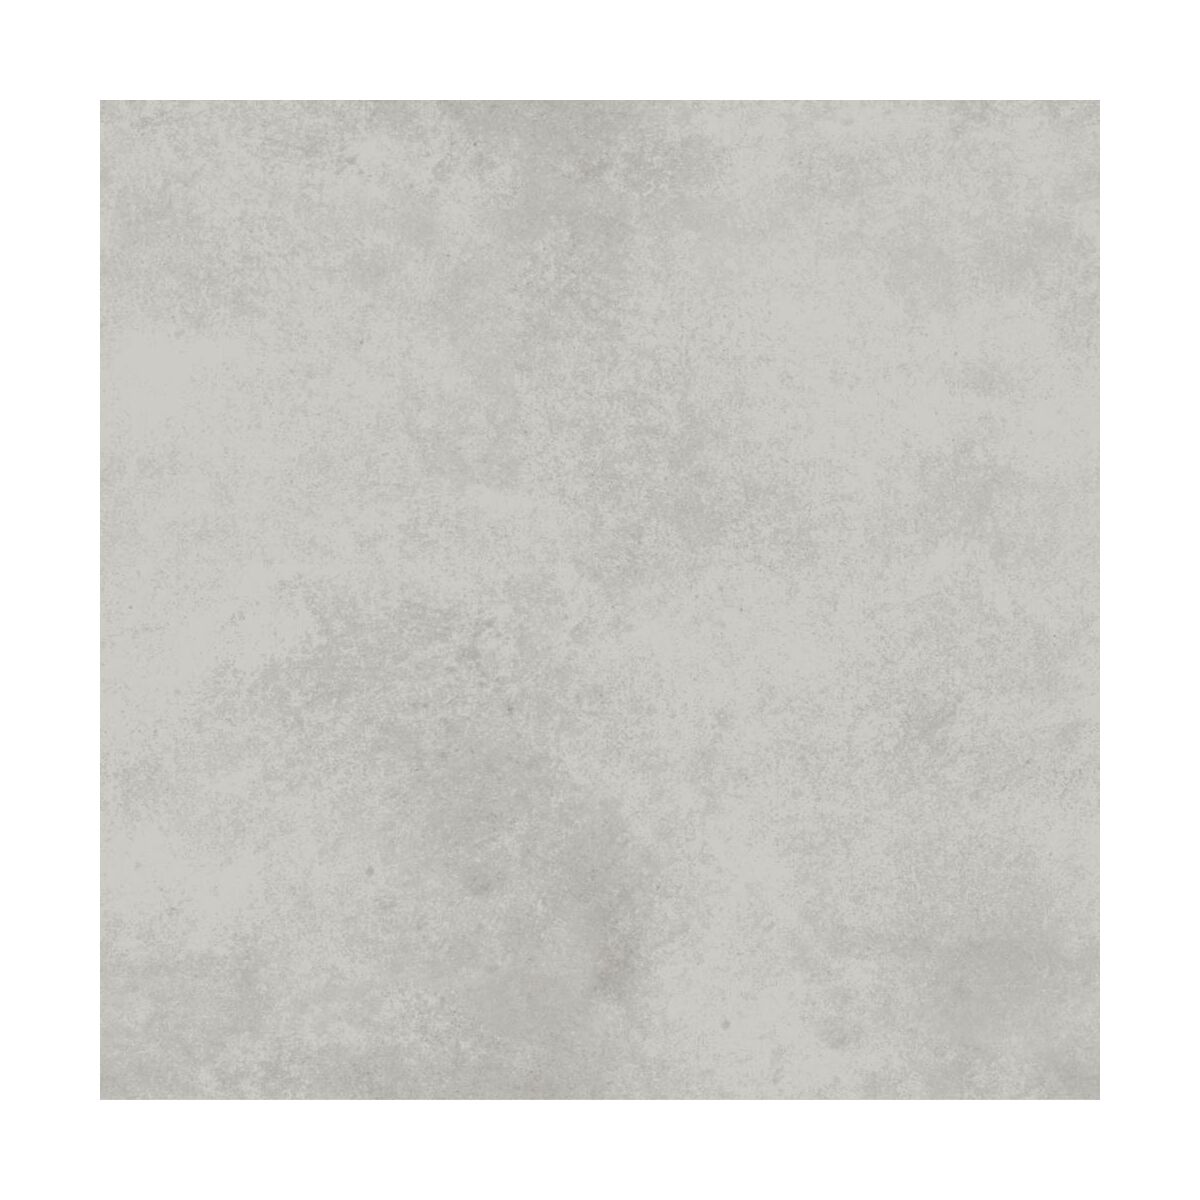 Panel kuchenny szklany Cement grey 60 x 60 cm Alfa-Cer